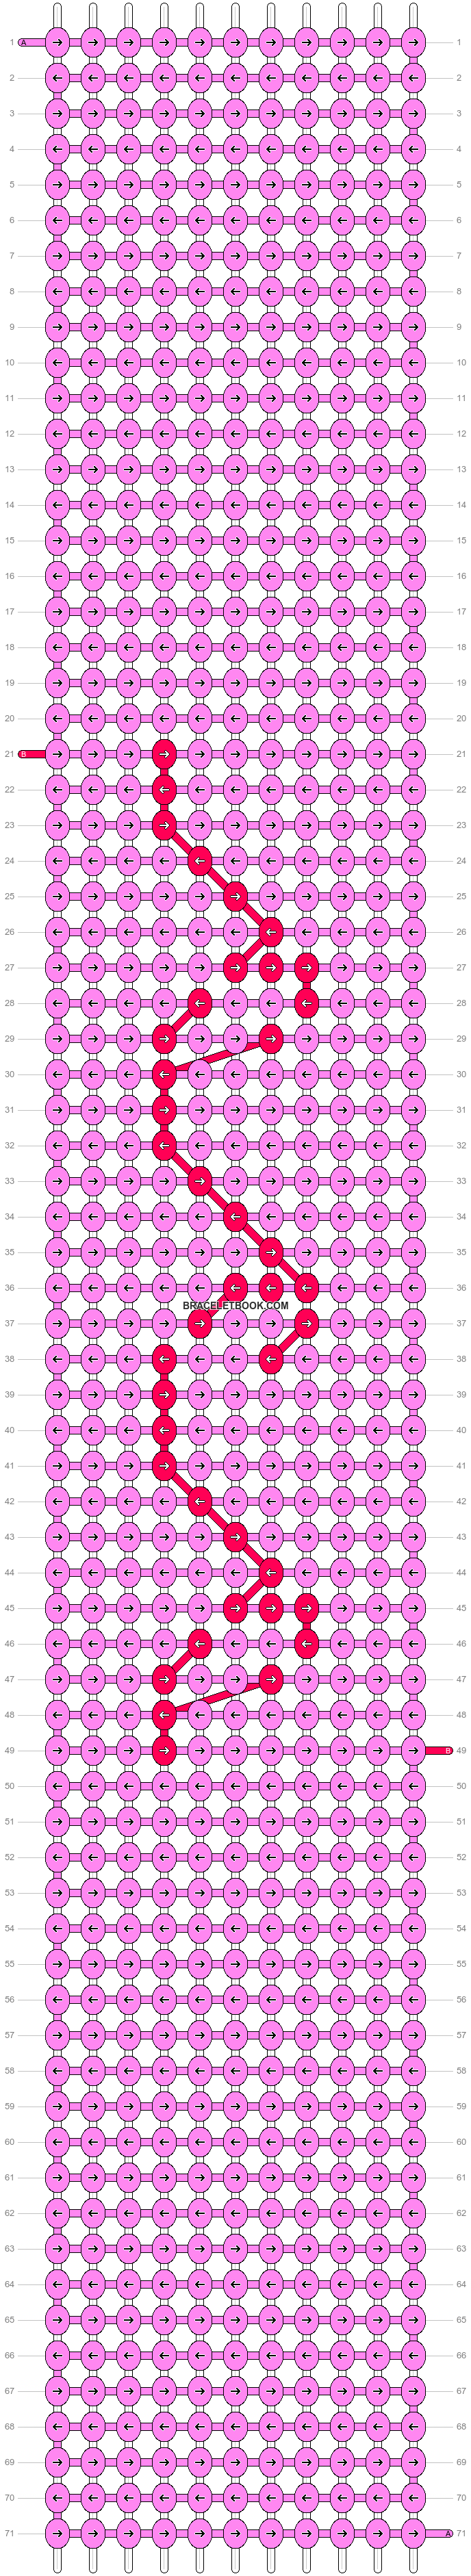 Alpha pattern #38672 variation #44709 pattern